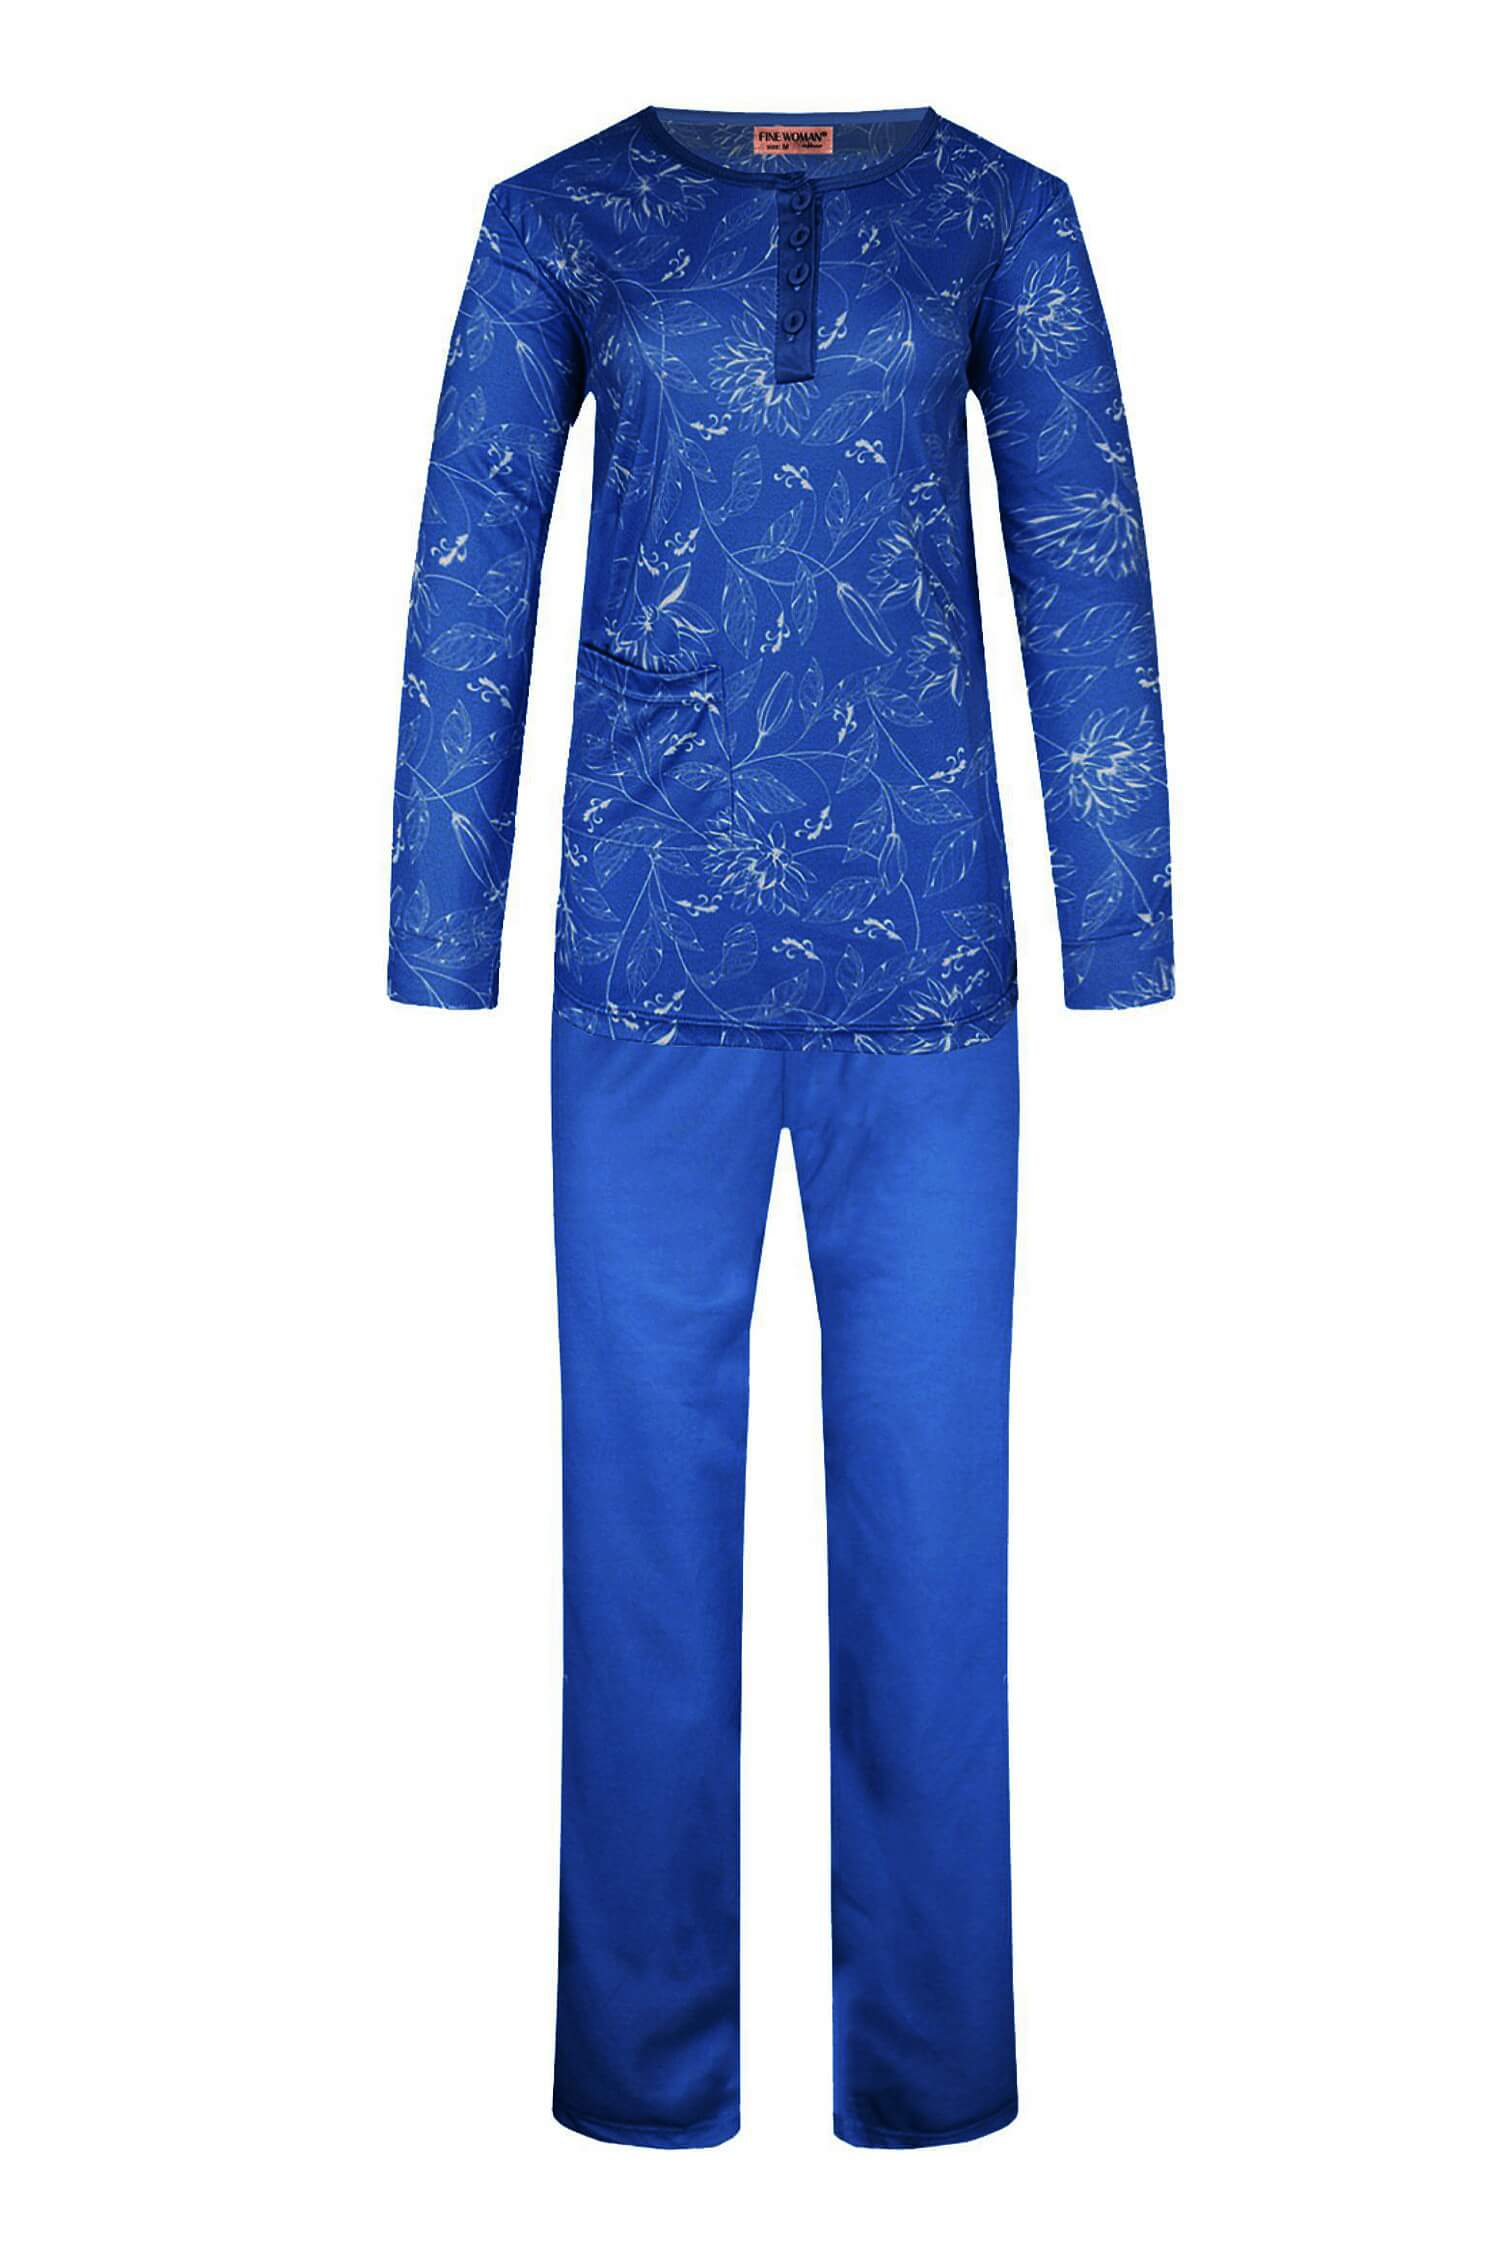 Sára dámské pyžamo dlouhý rukáv 2299 XXL tmavě modrá